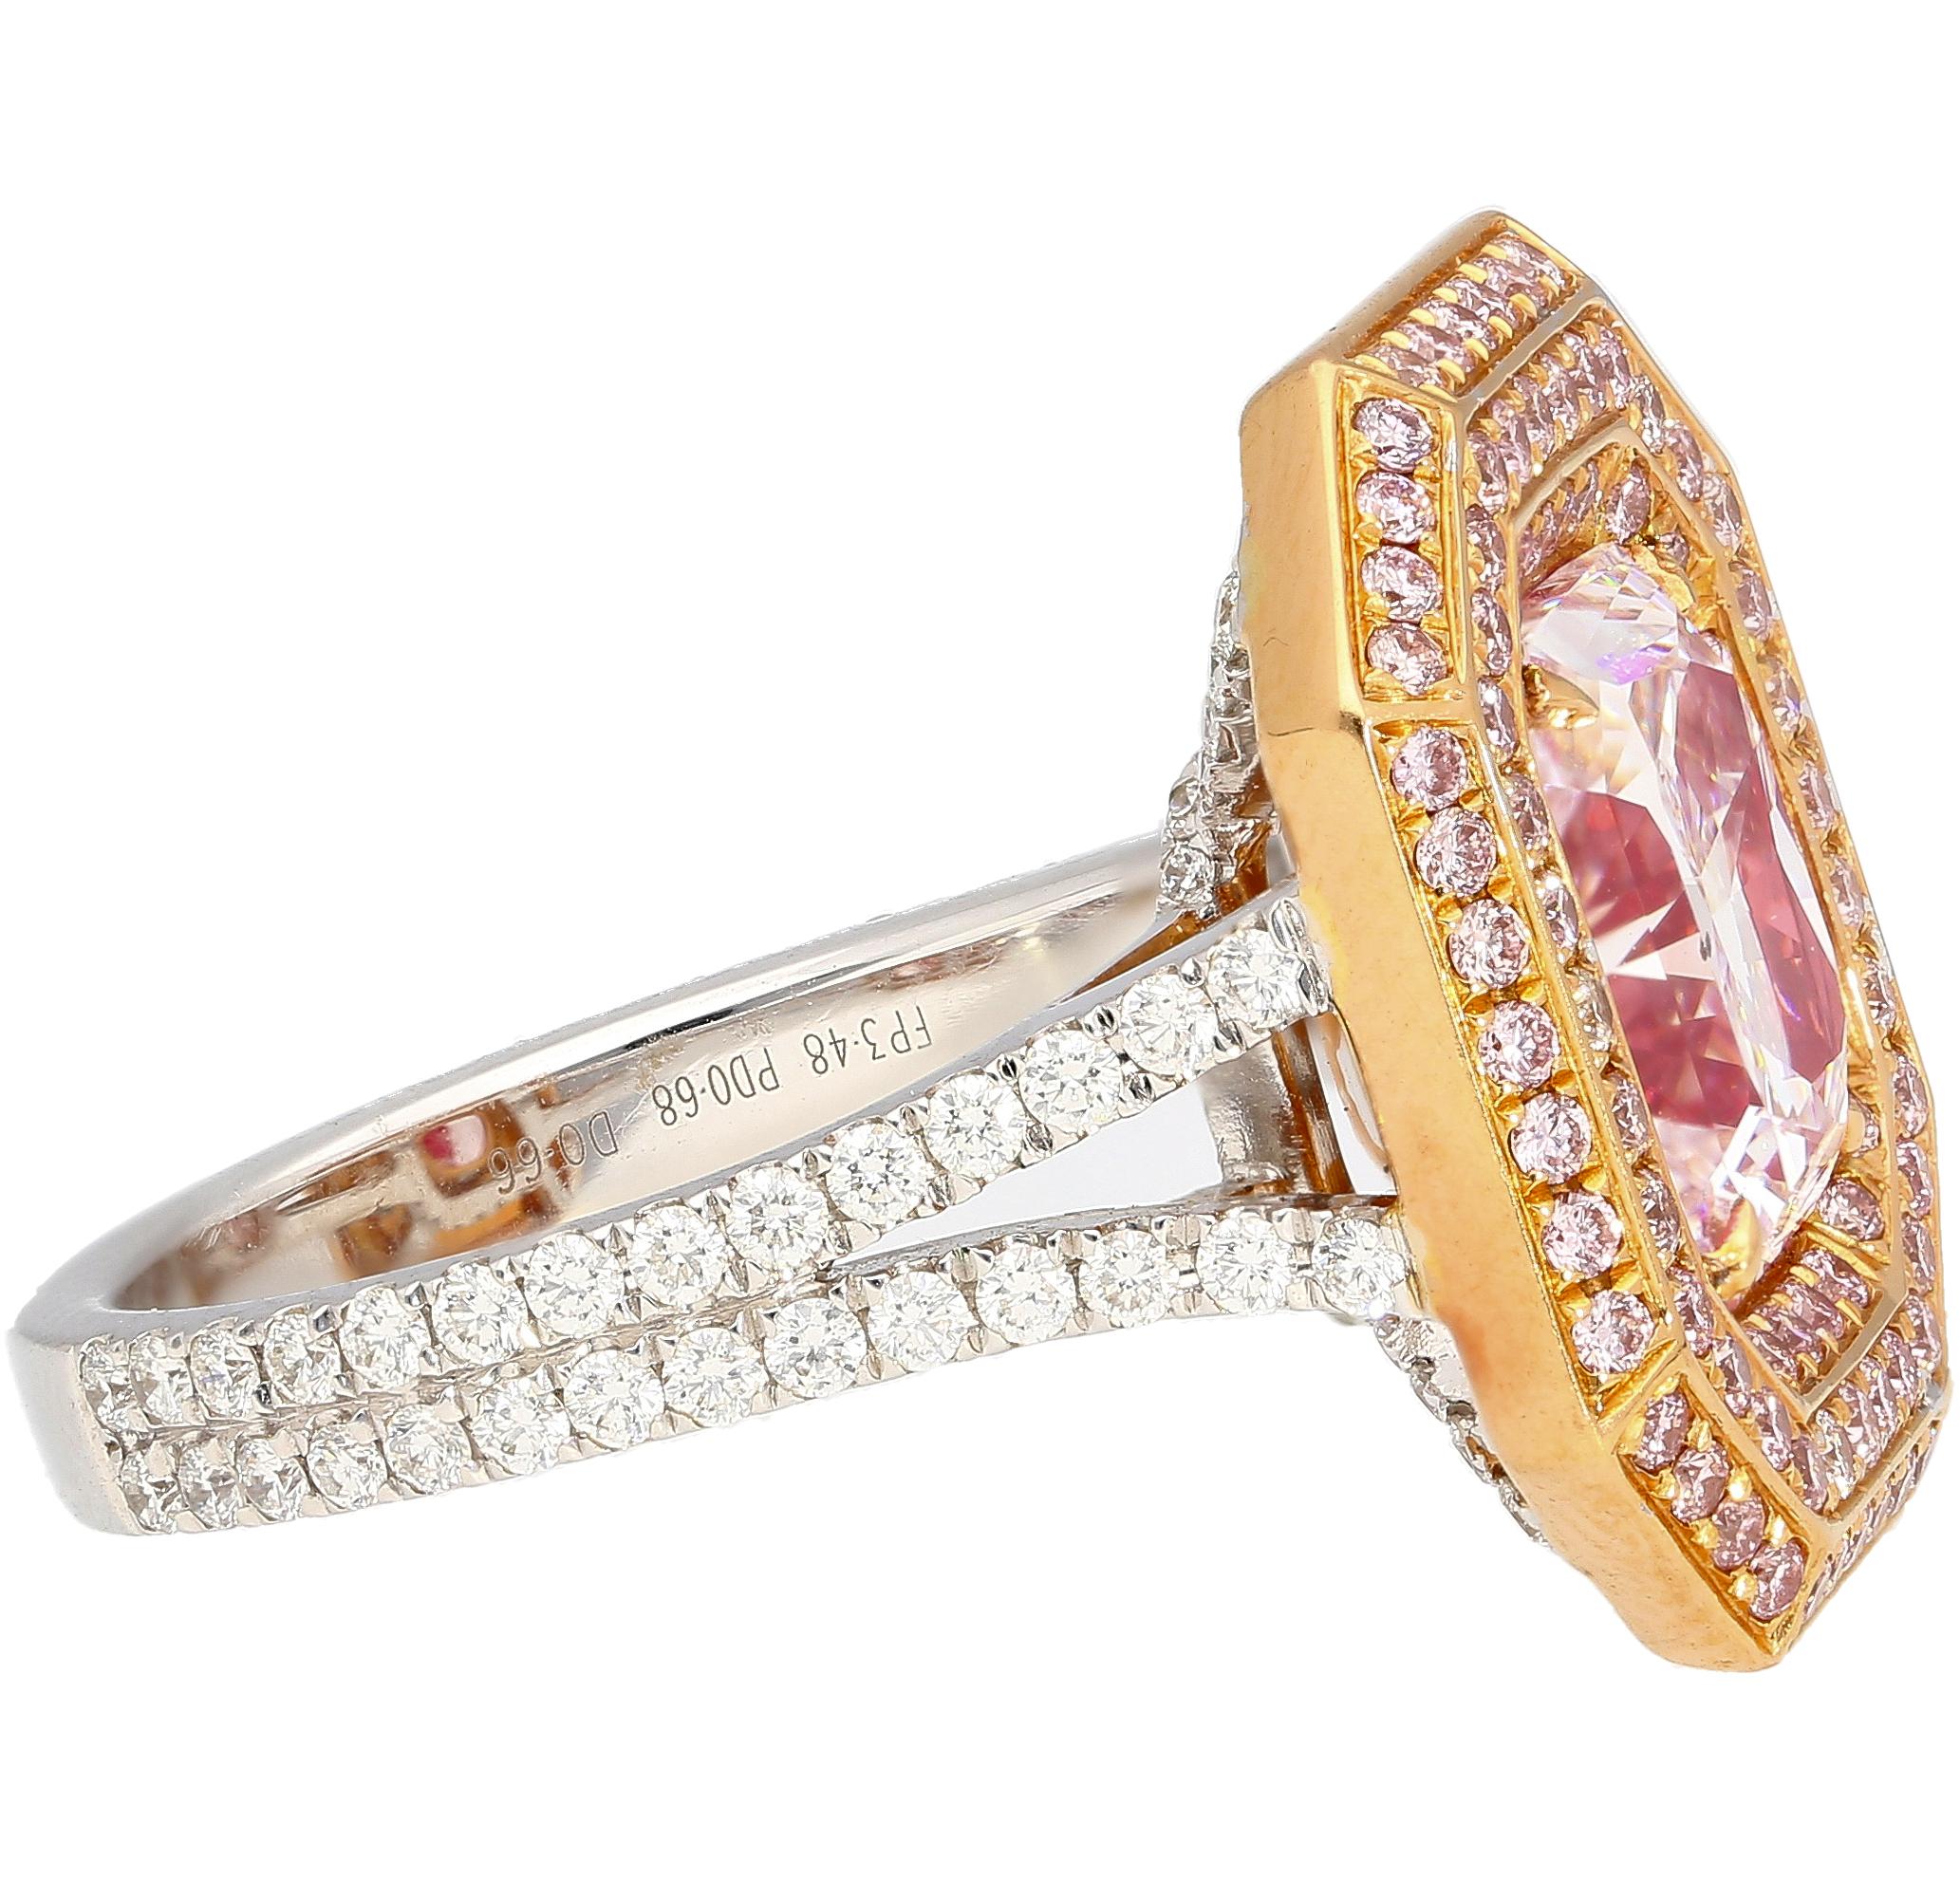 GIA Certified 3.48 Carat Radiant Cut Fancy Light Pink Diamond Ring in 18k  For Sale 1